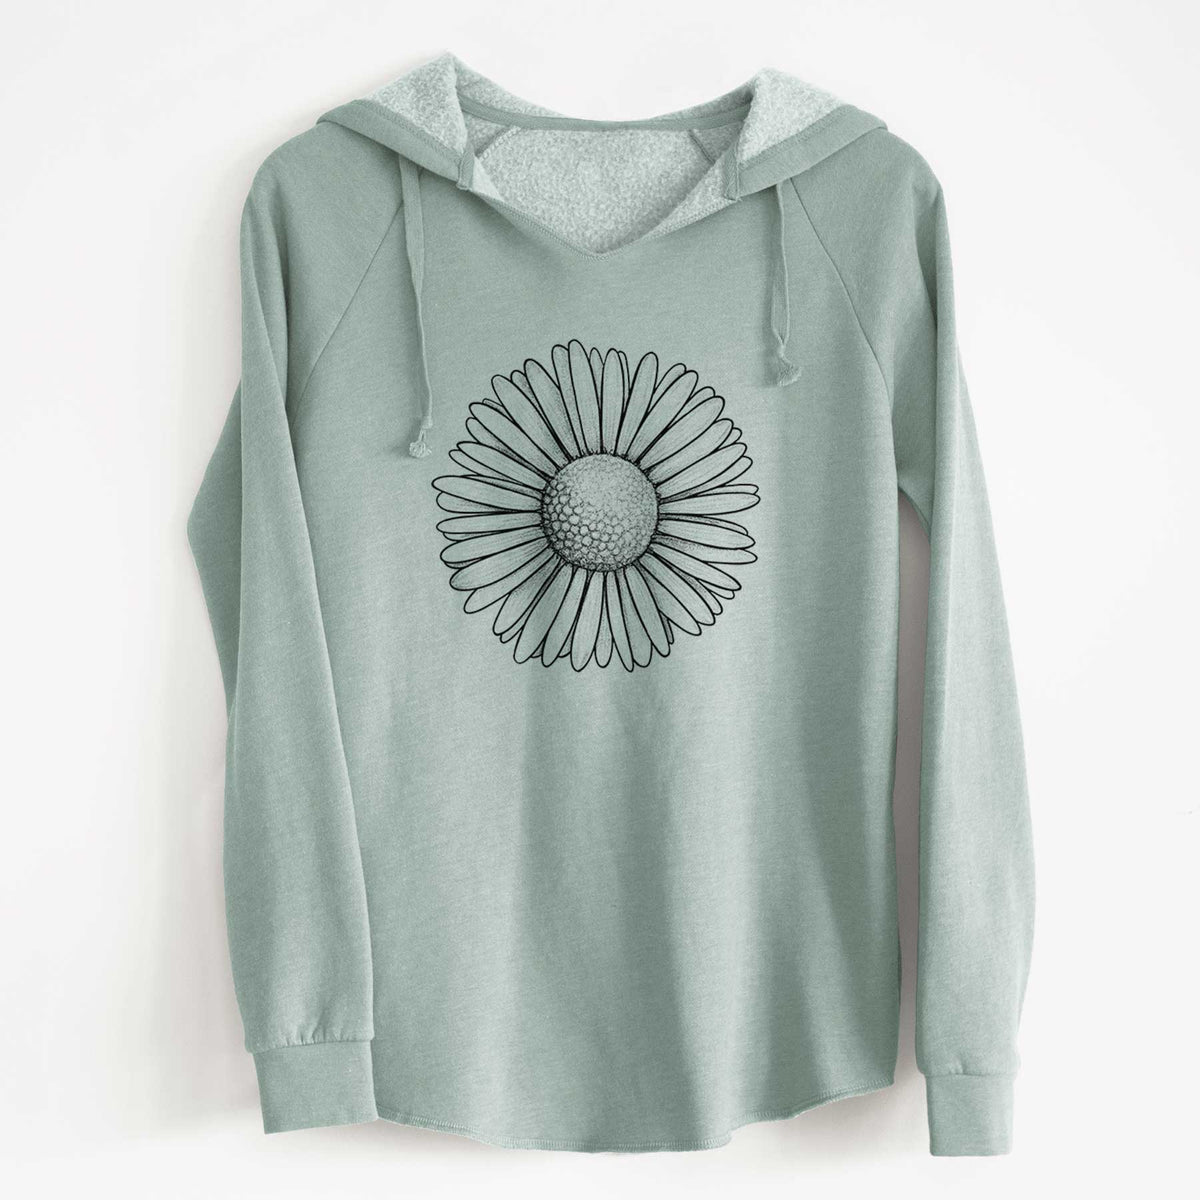 Bellis perennis - The Common Daisy - Cali Wave Hooded Sweatshirt